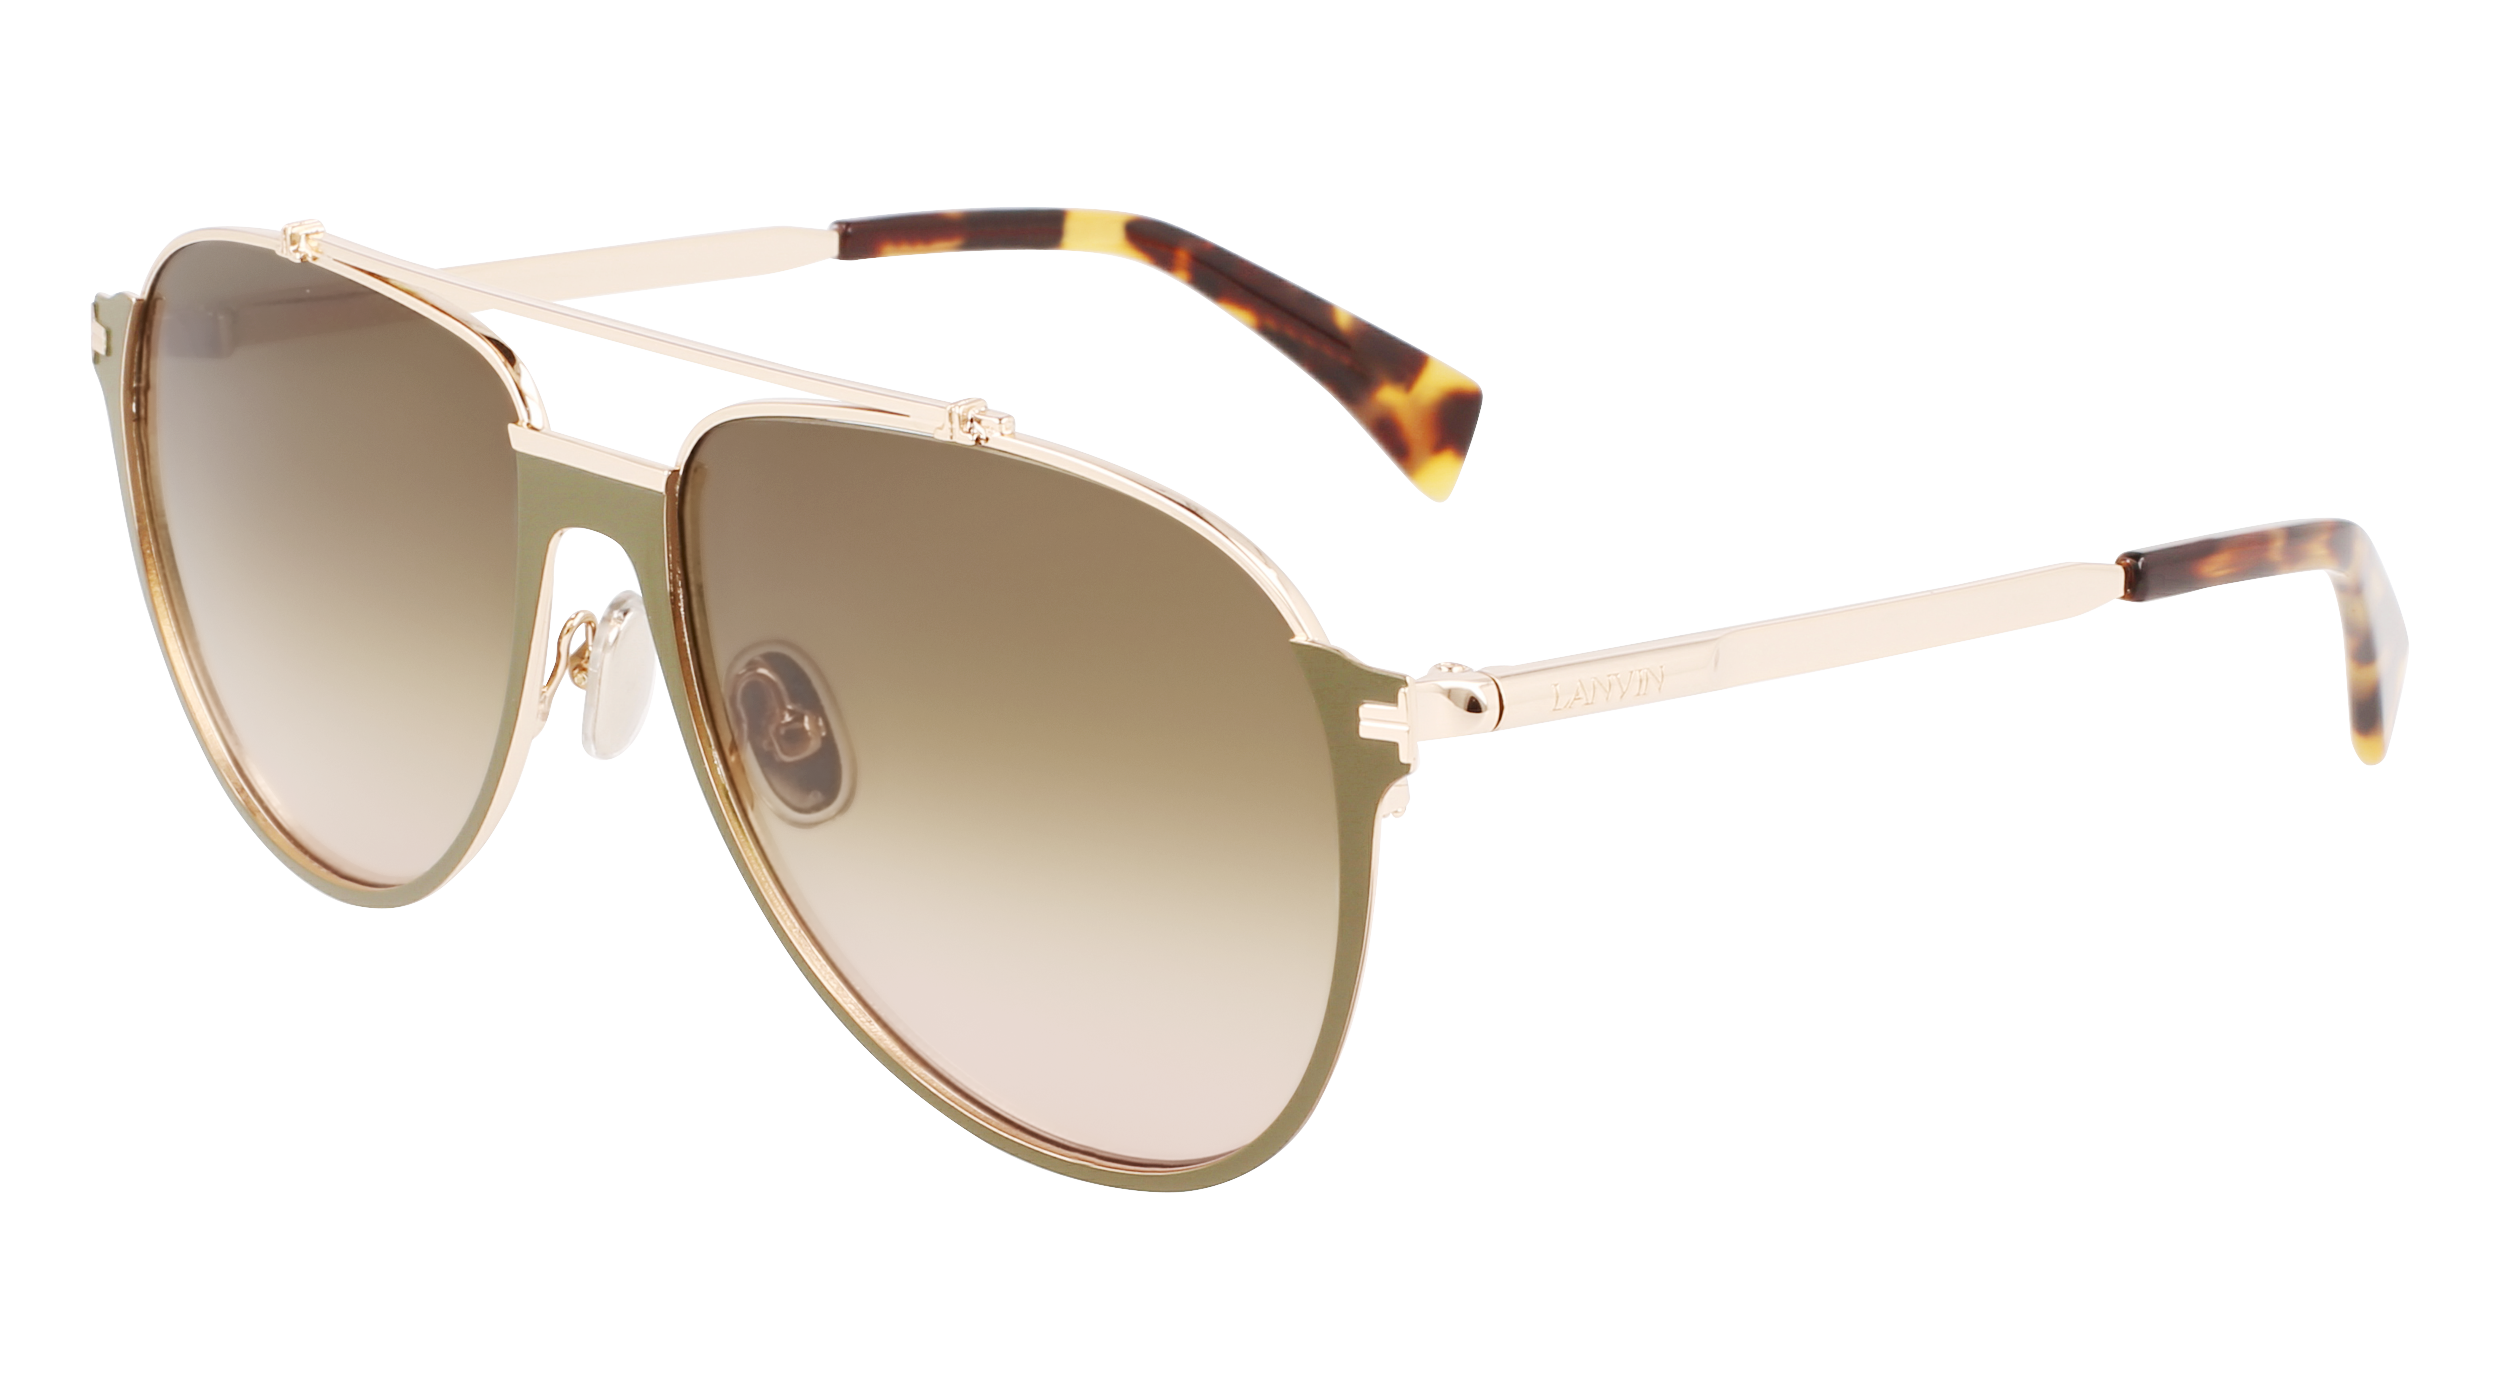 LNV117S 319 60 Lanvin sunglasses - George & Matilda Eyecare and Optometrist